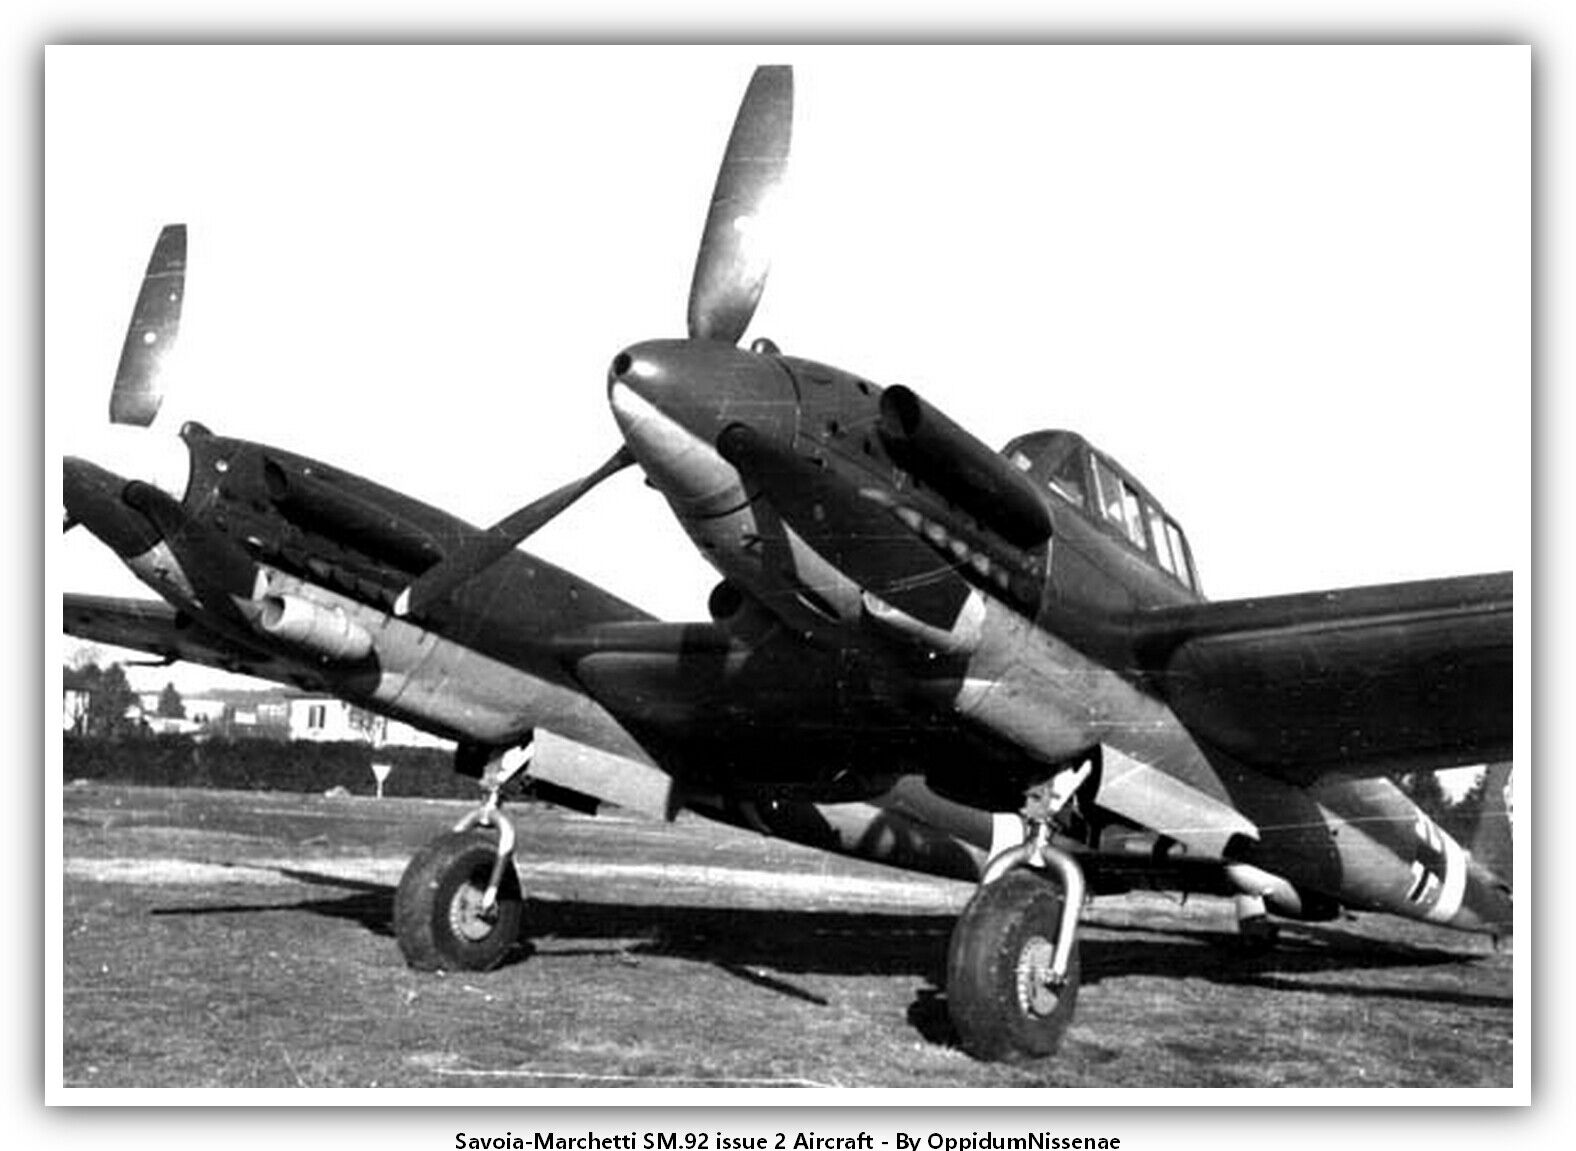 Savoia-Marchetti SM.92 issue 2 Aircraft